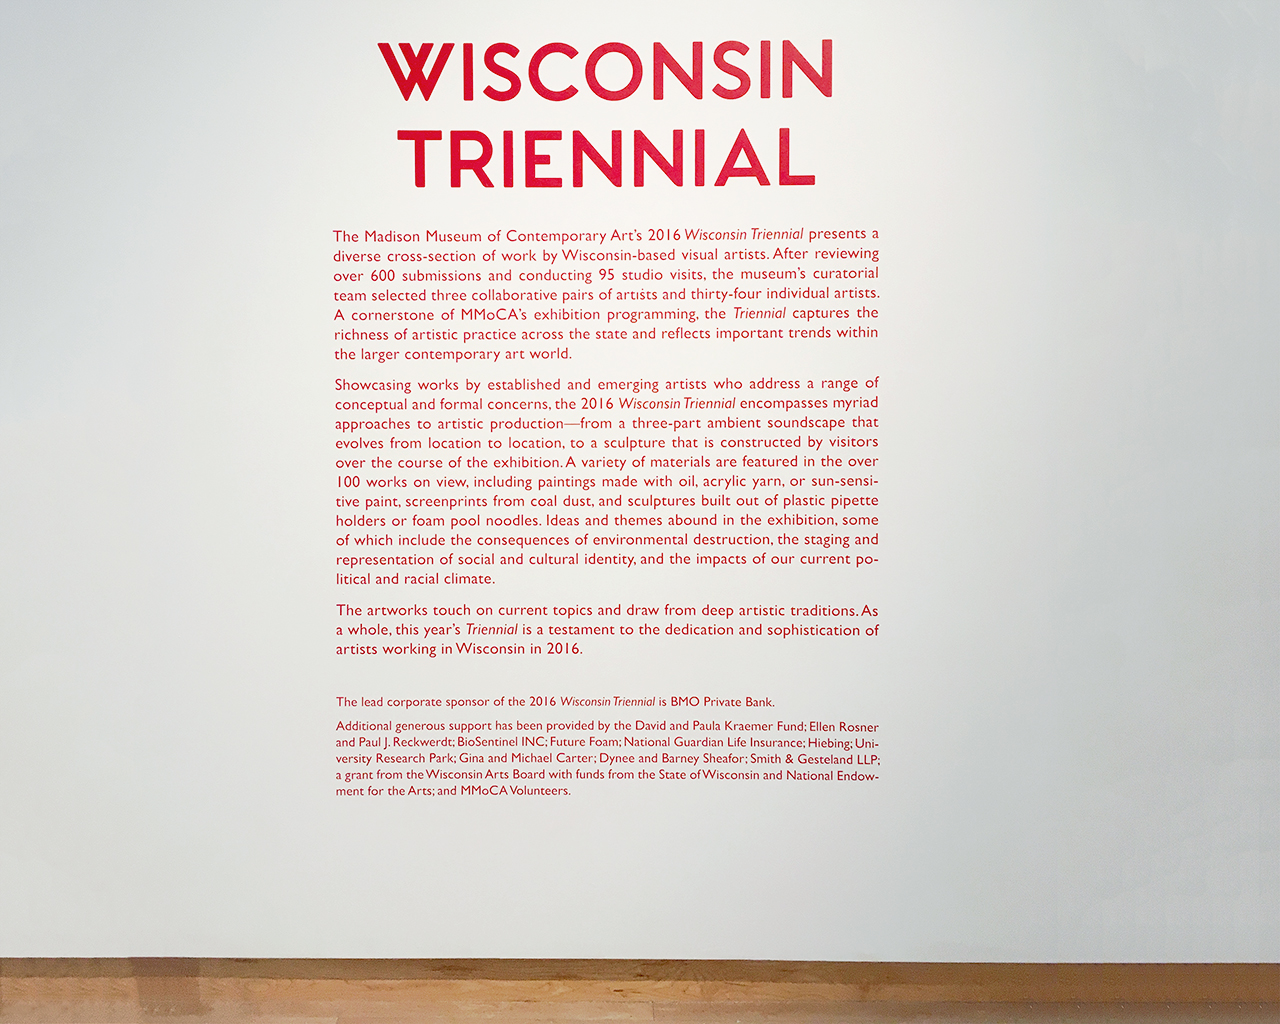 Helen_Hawley_MMoCA_Wisconsin_triennial.jpg